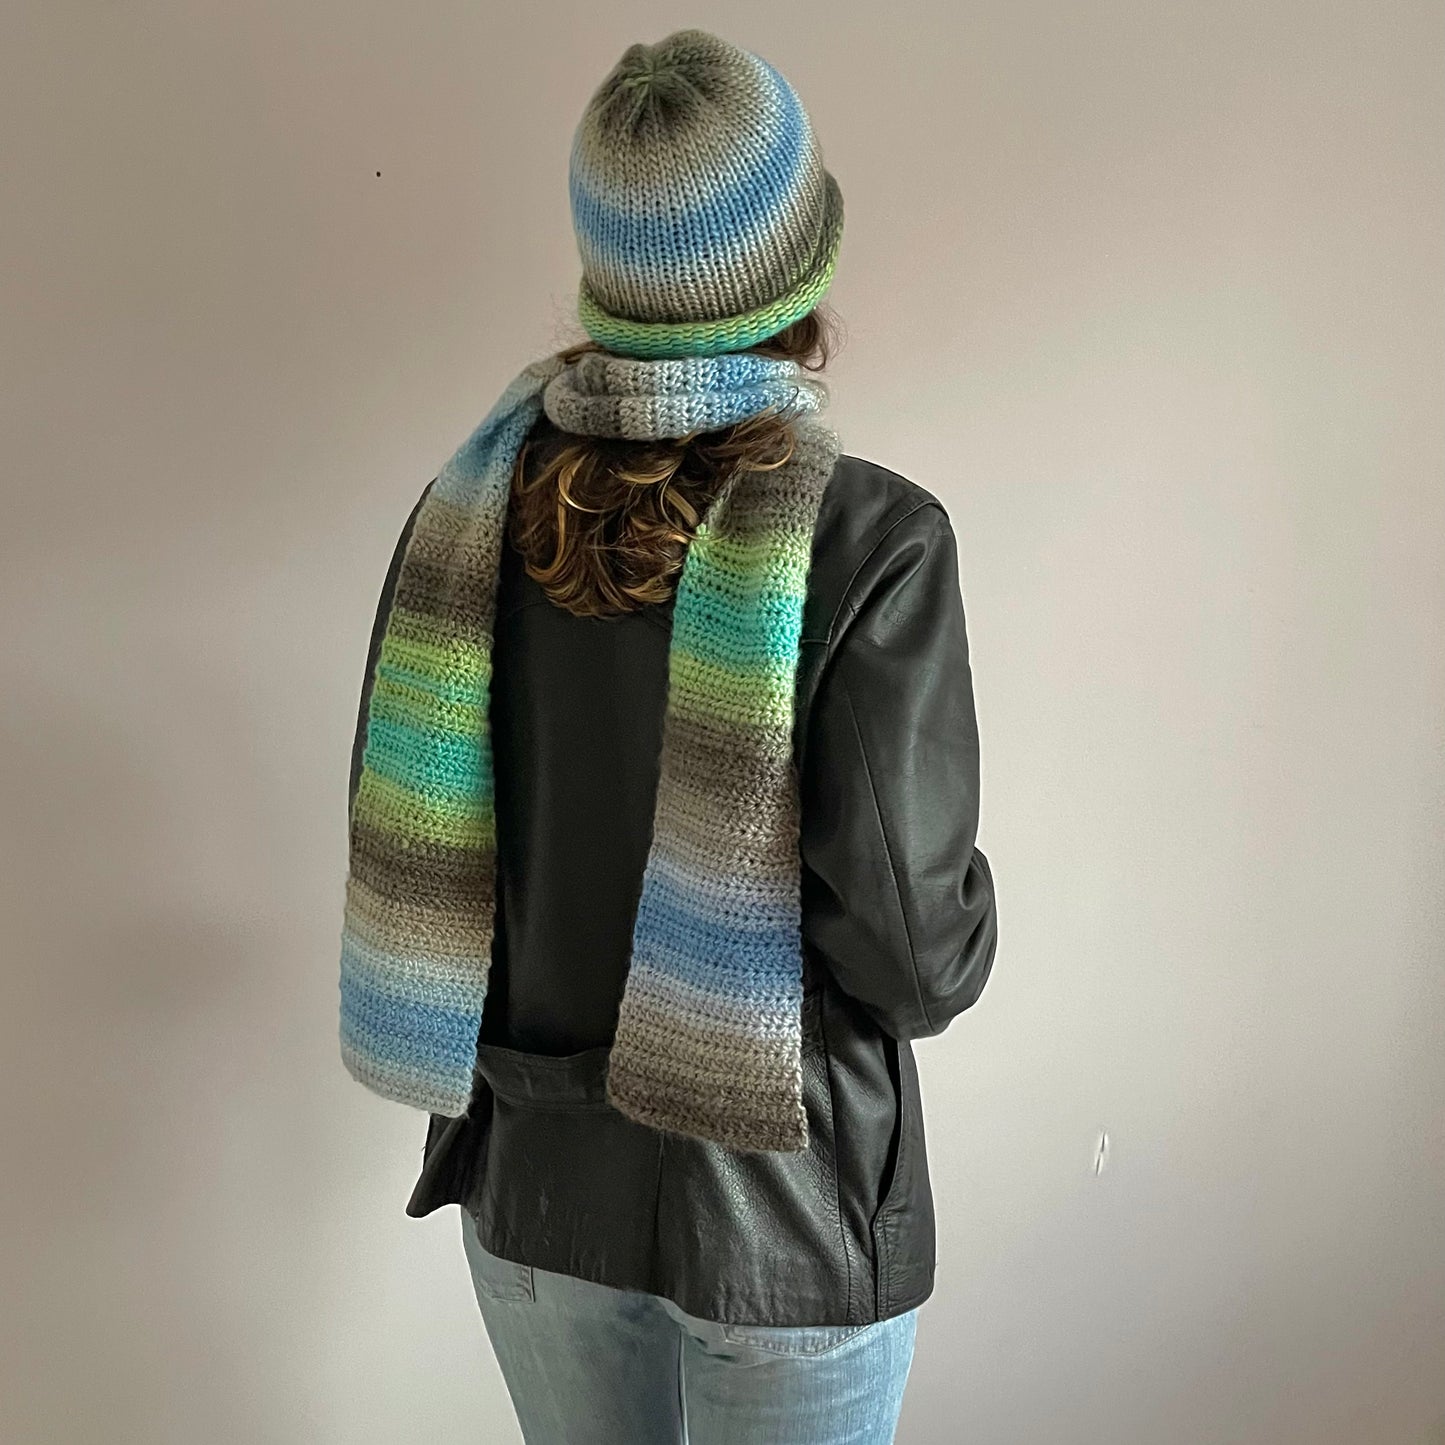 Handmade Ocean Shades crochet scarf